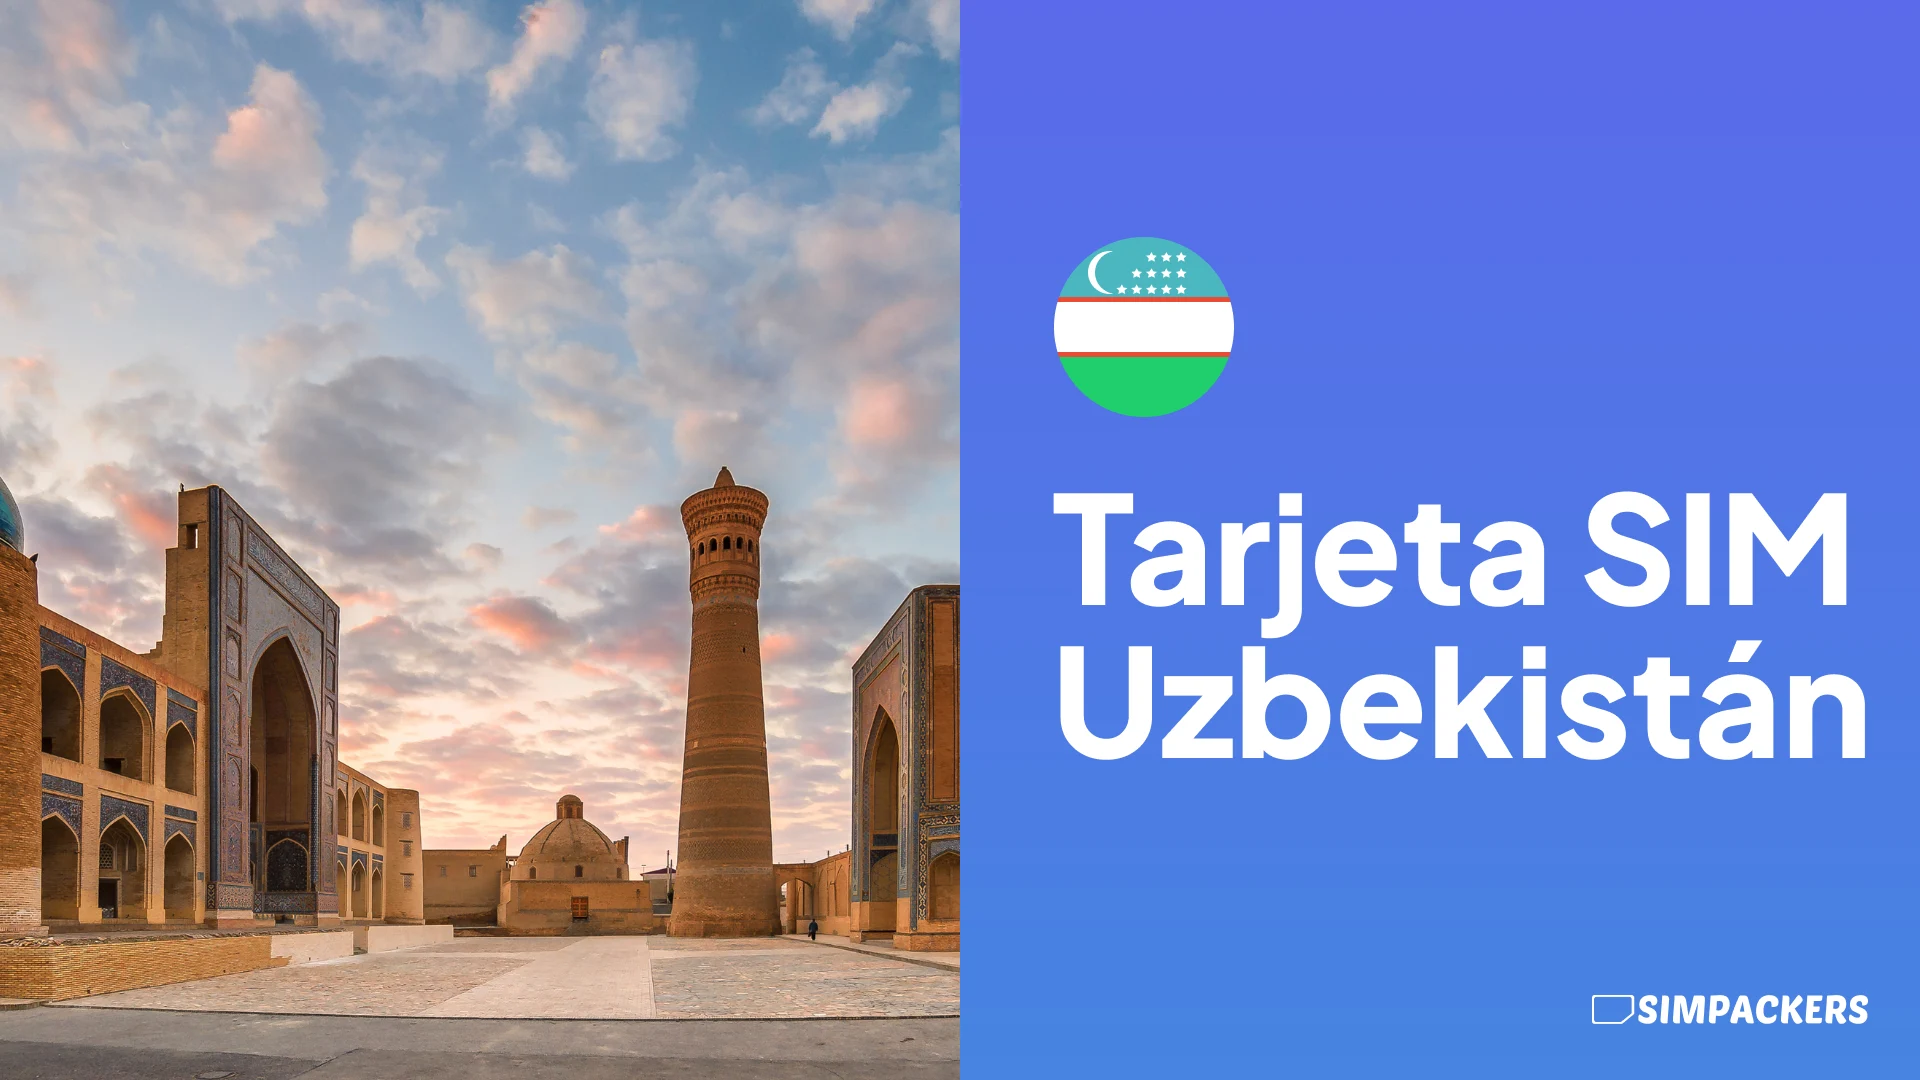 ES/FEATURED_IMAGES/tarjeta-sim-uzbekistan.webp